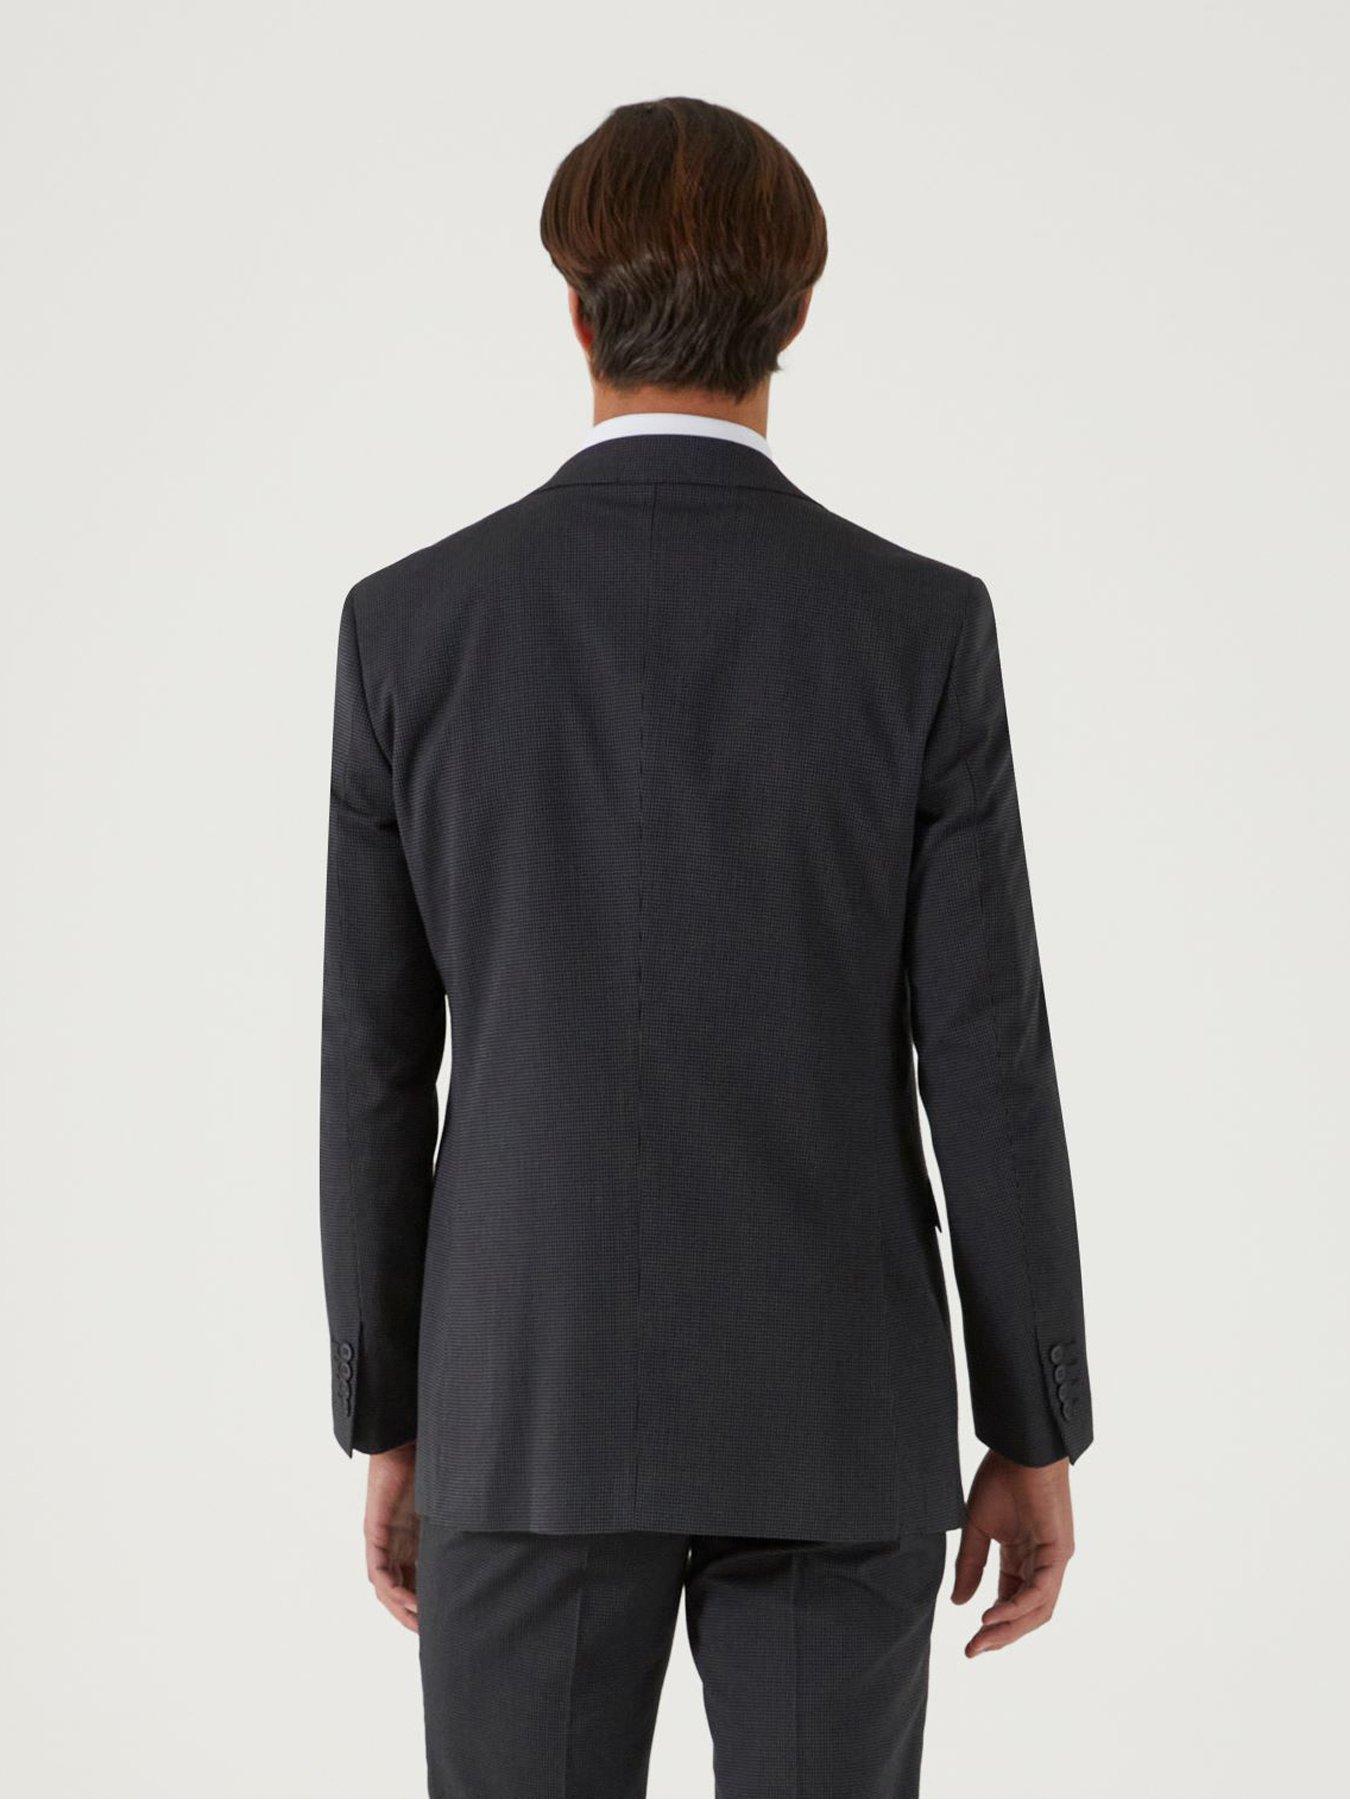 Truman Suit Tailored Jacket Micro Dot Charcoal / Black